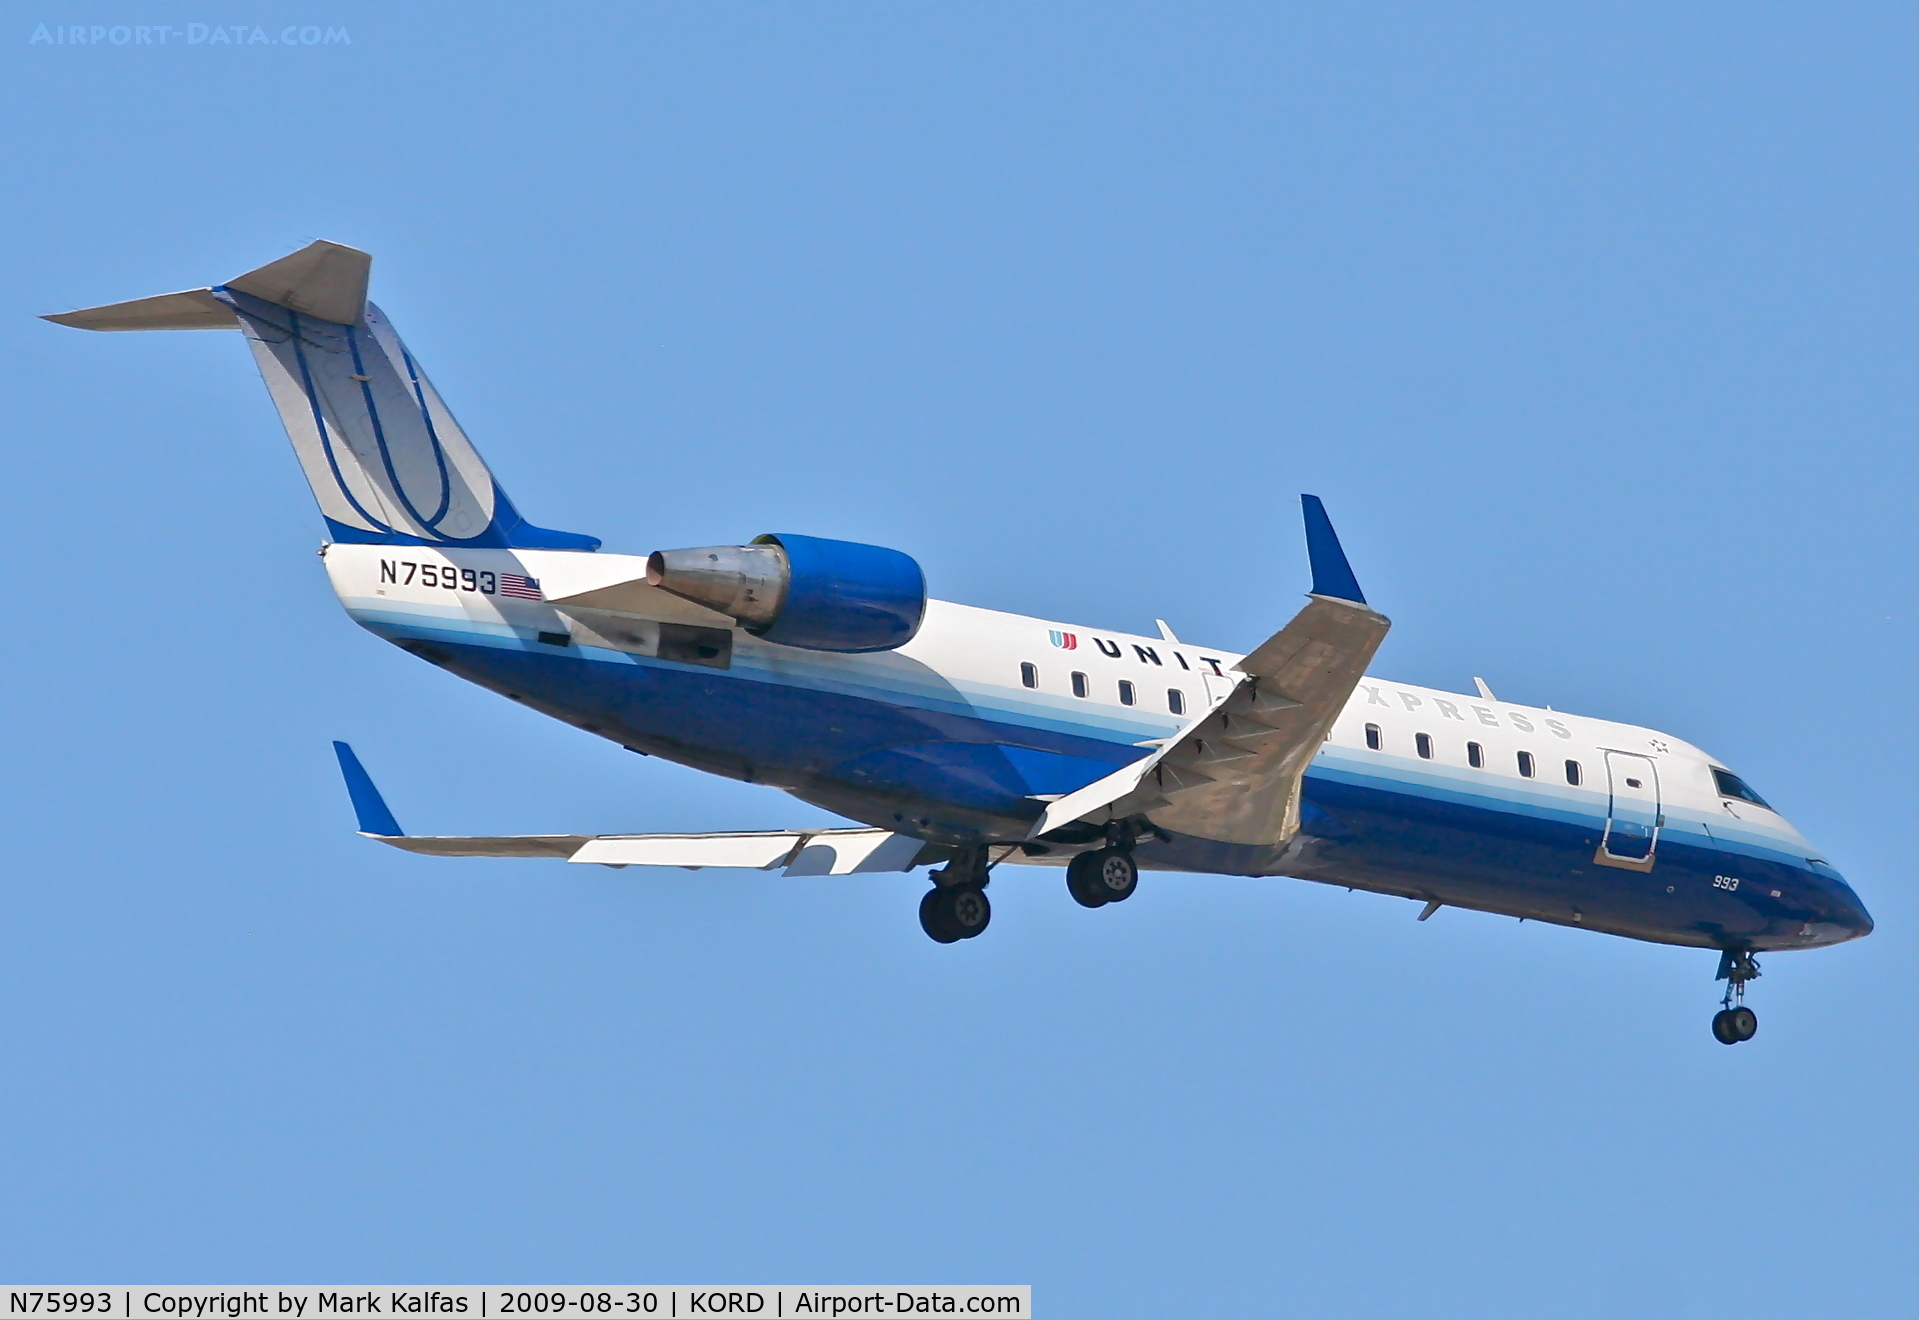 N75993, 2000 Bombardier CRJ-200ER (CL-600-2B19) C/N 7372, Mesa Airlines/United Express CL-600-2B19, N75993 RWY 10 approach KORD